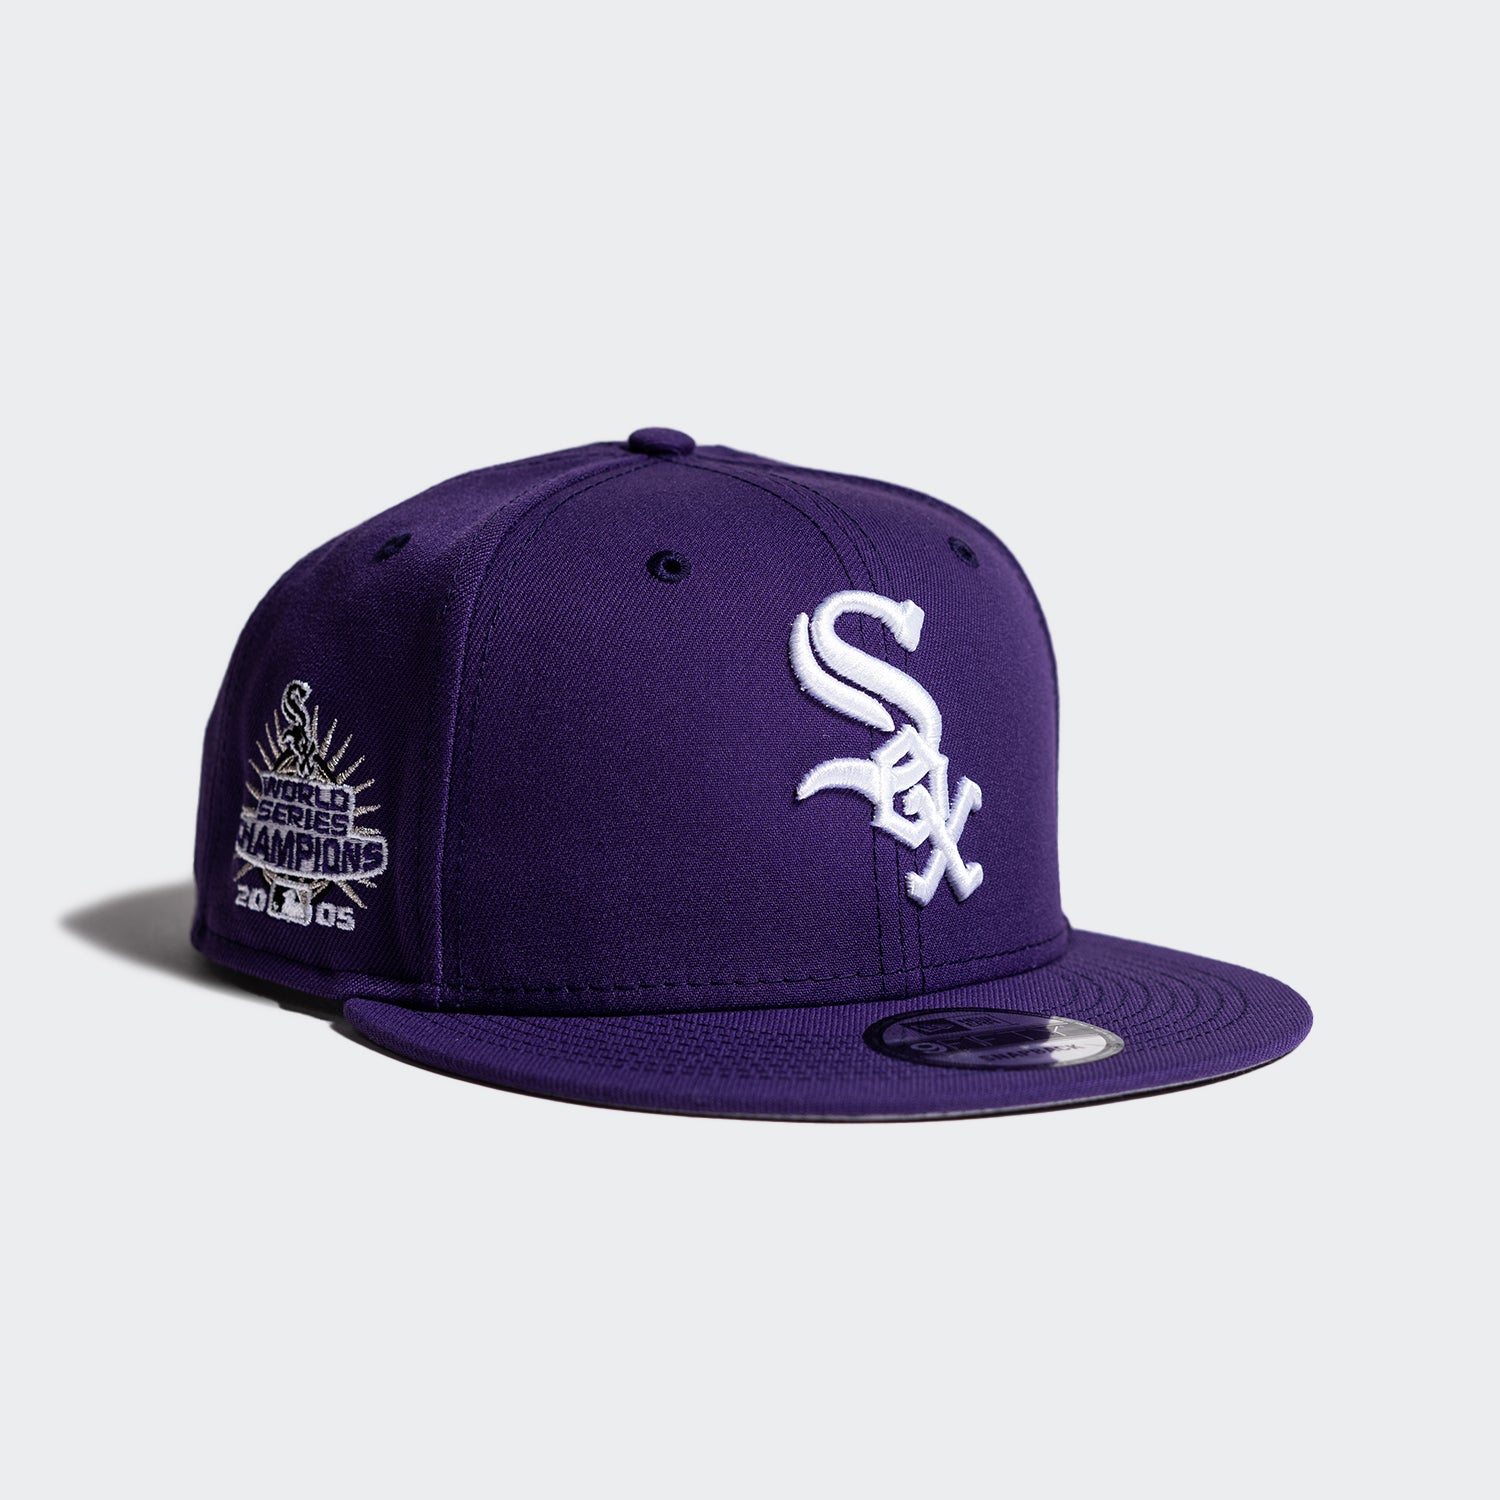 New Era White Sox Snapback Hat